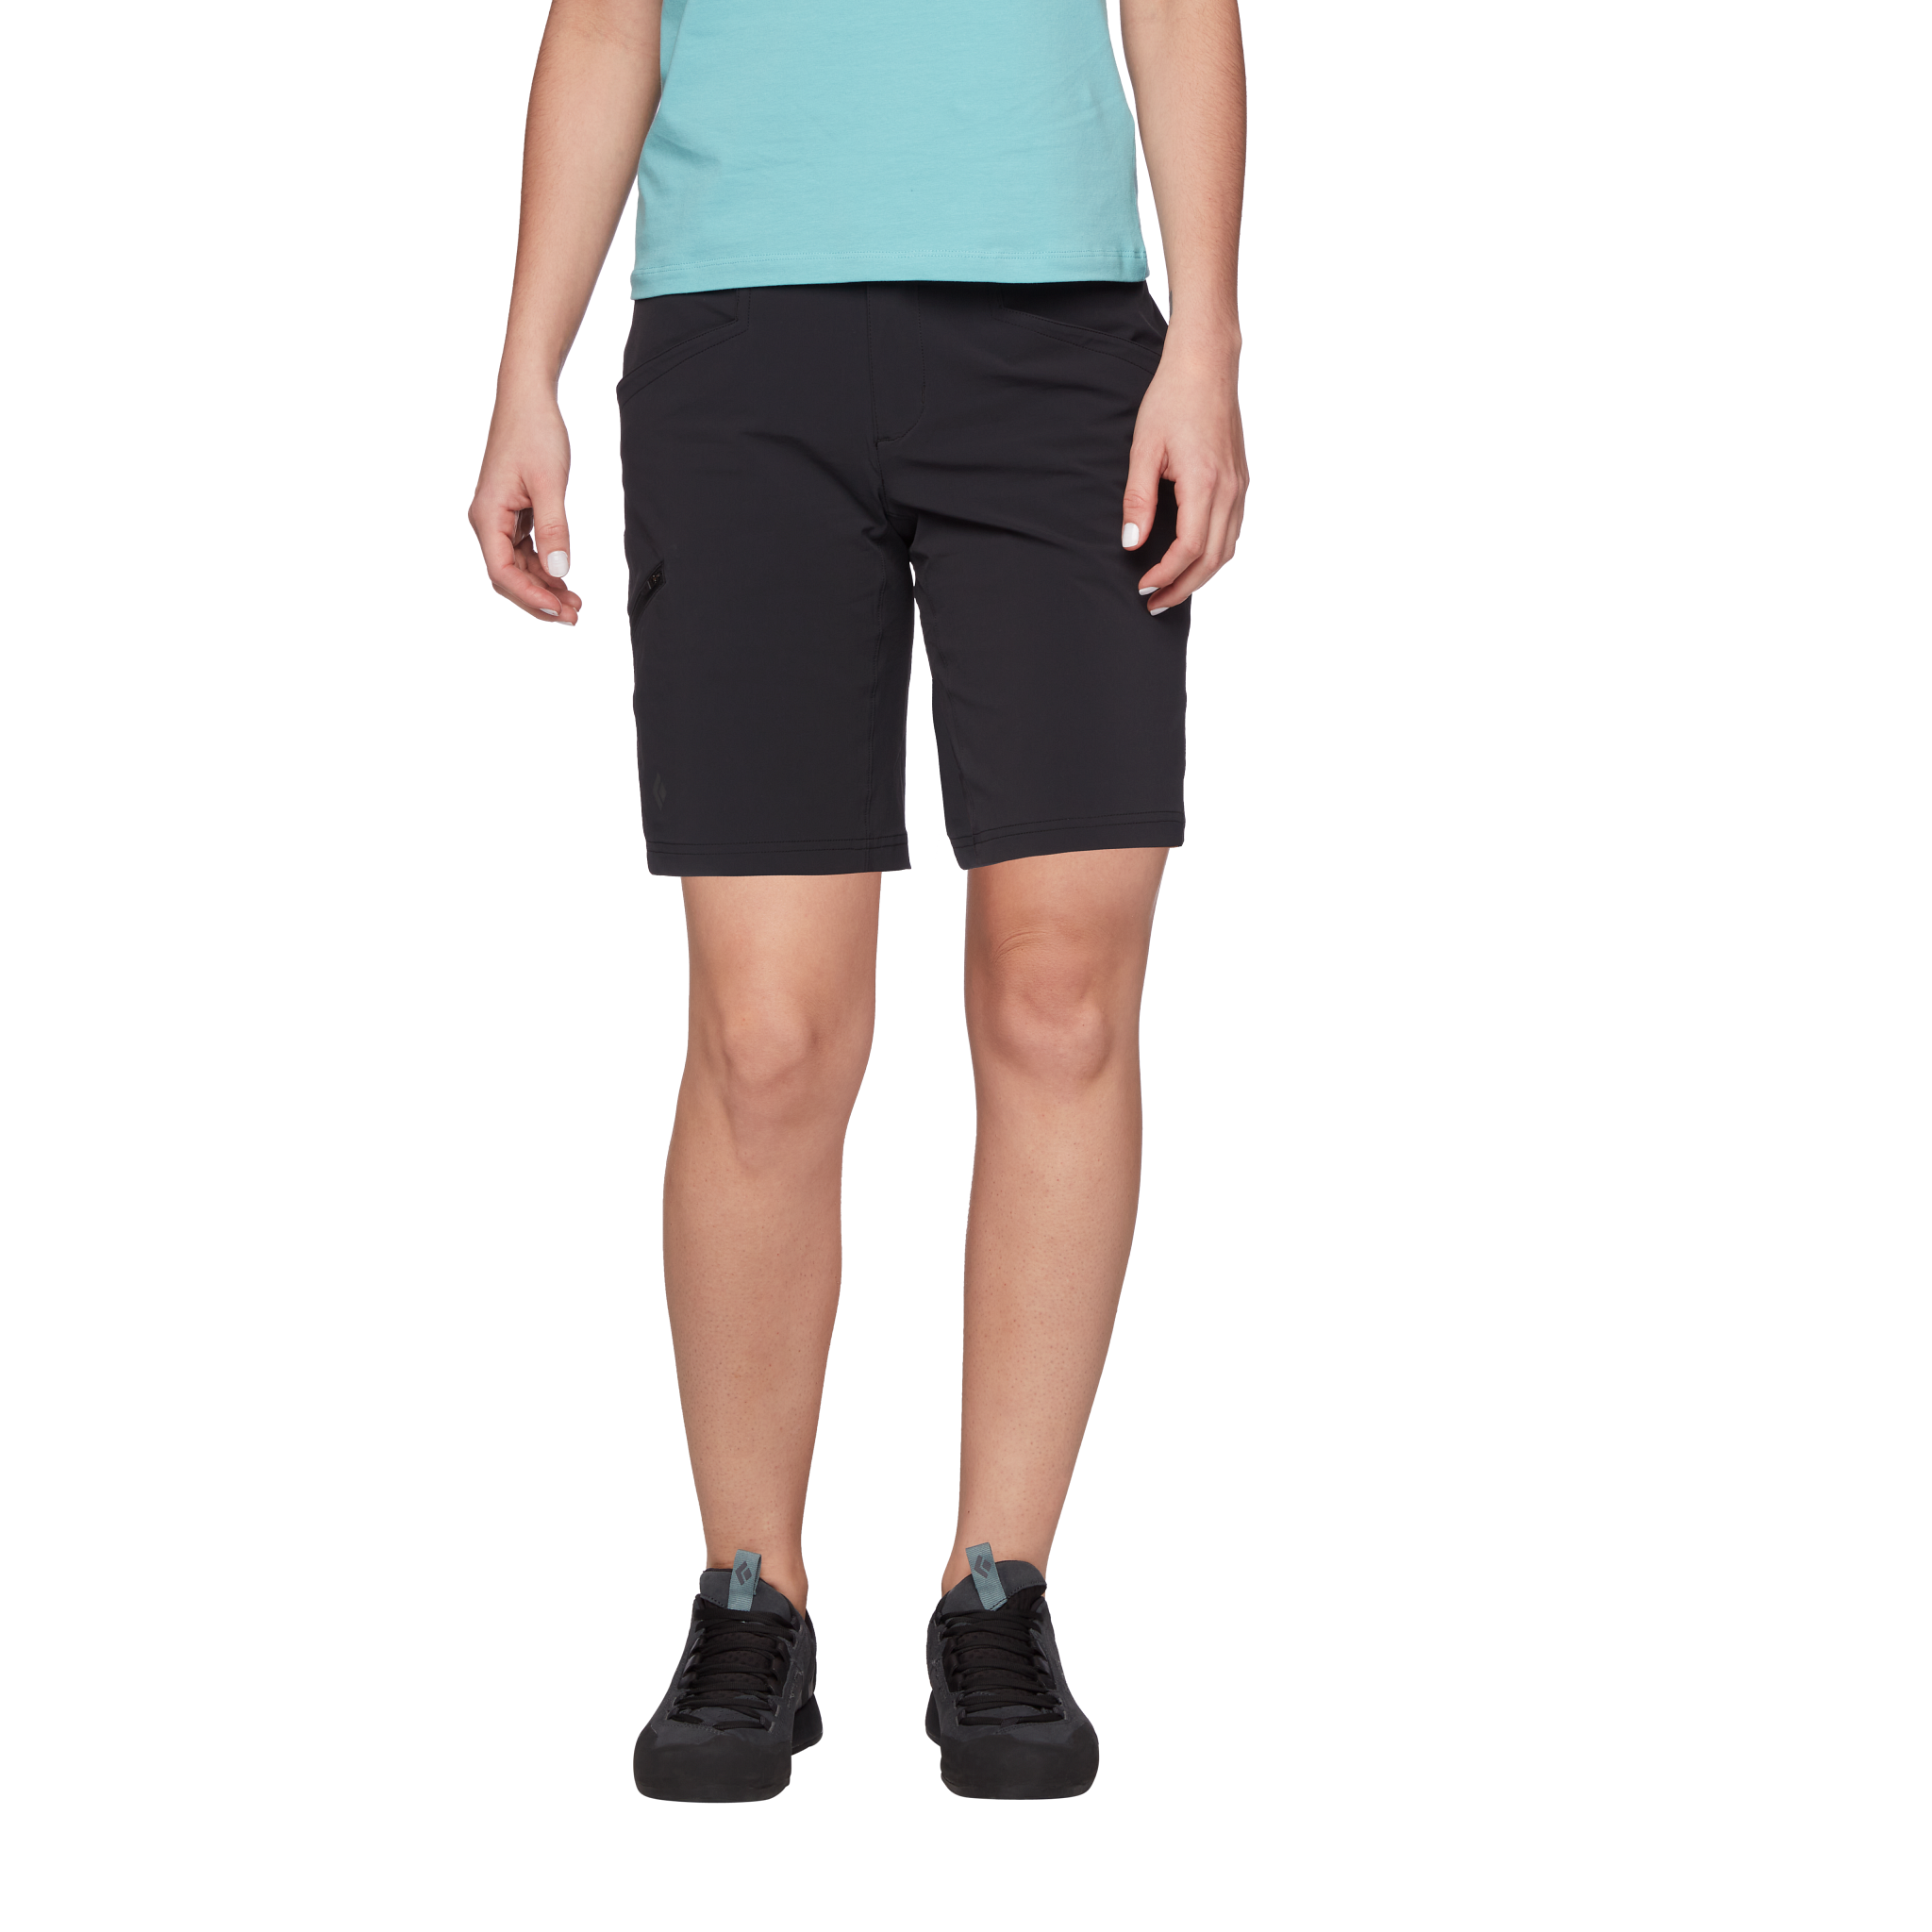 Black Diamond Equipment Women's Valley Shorts Size 2, in Black